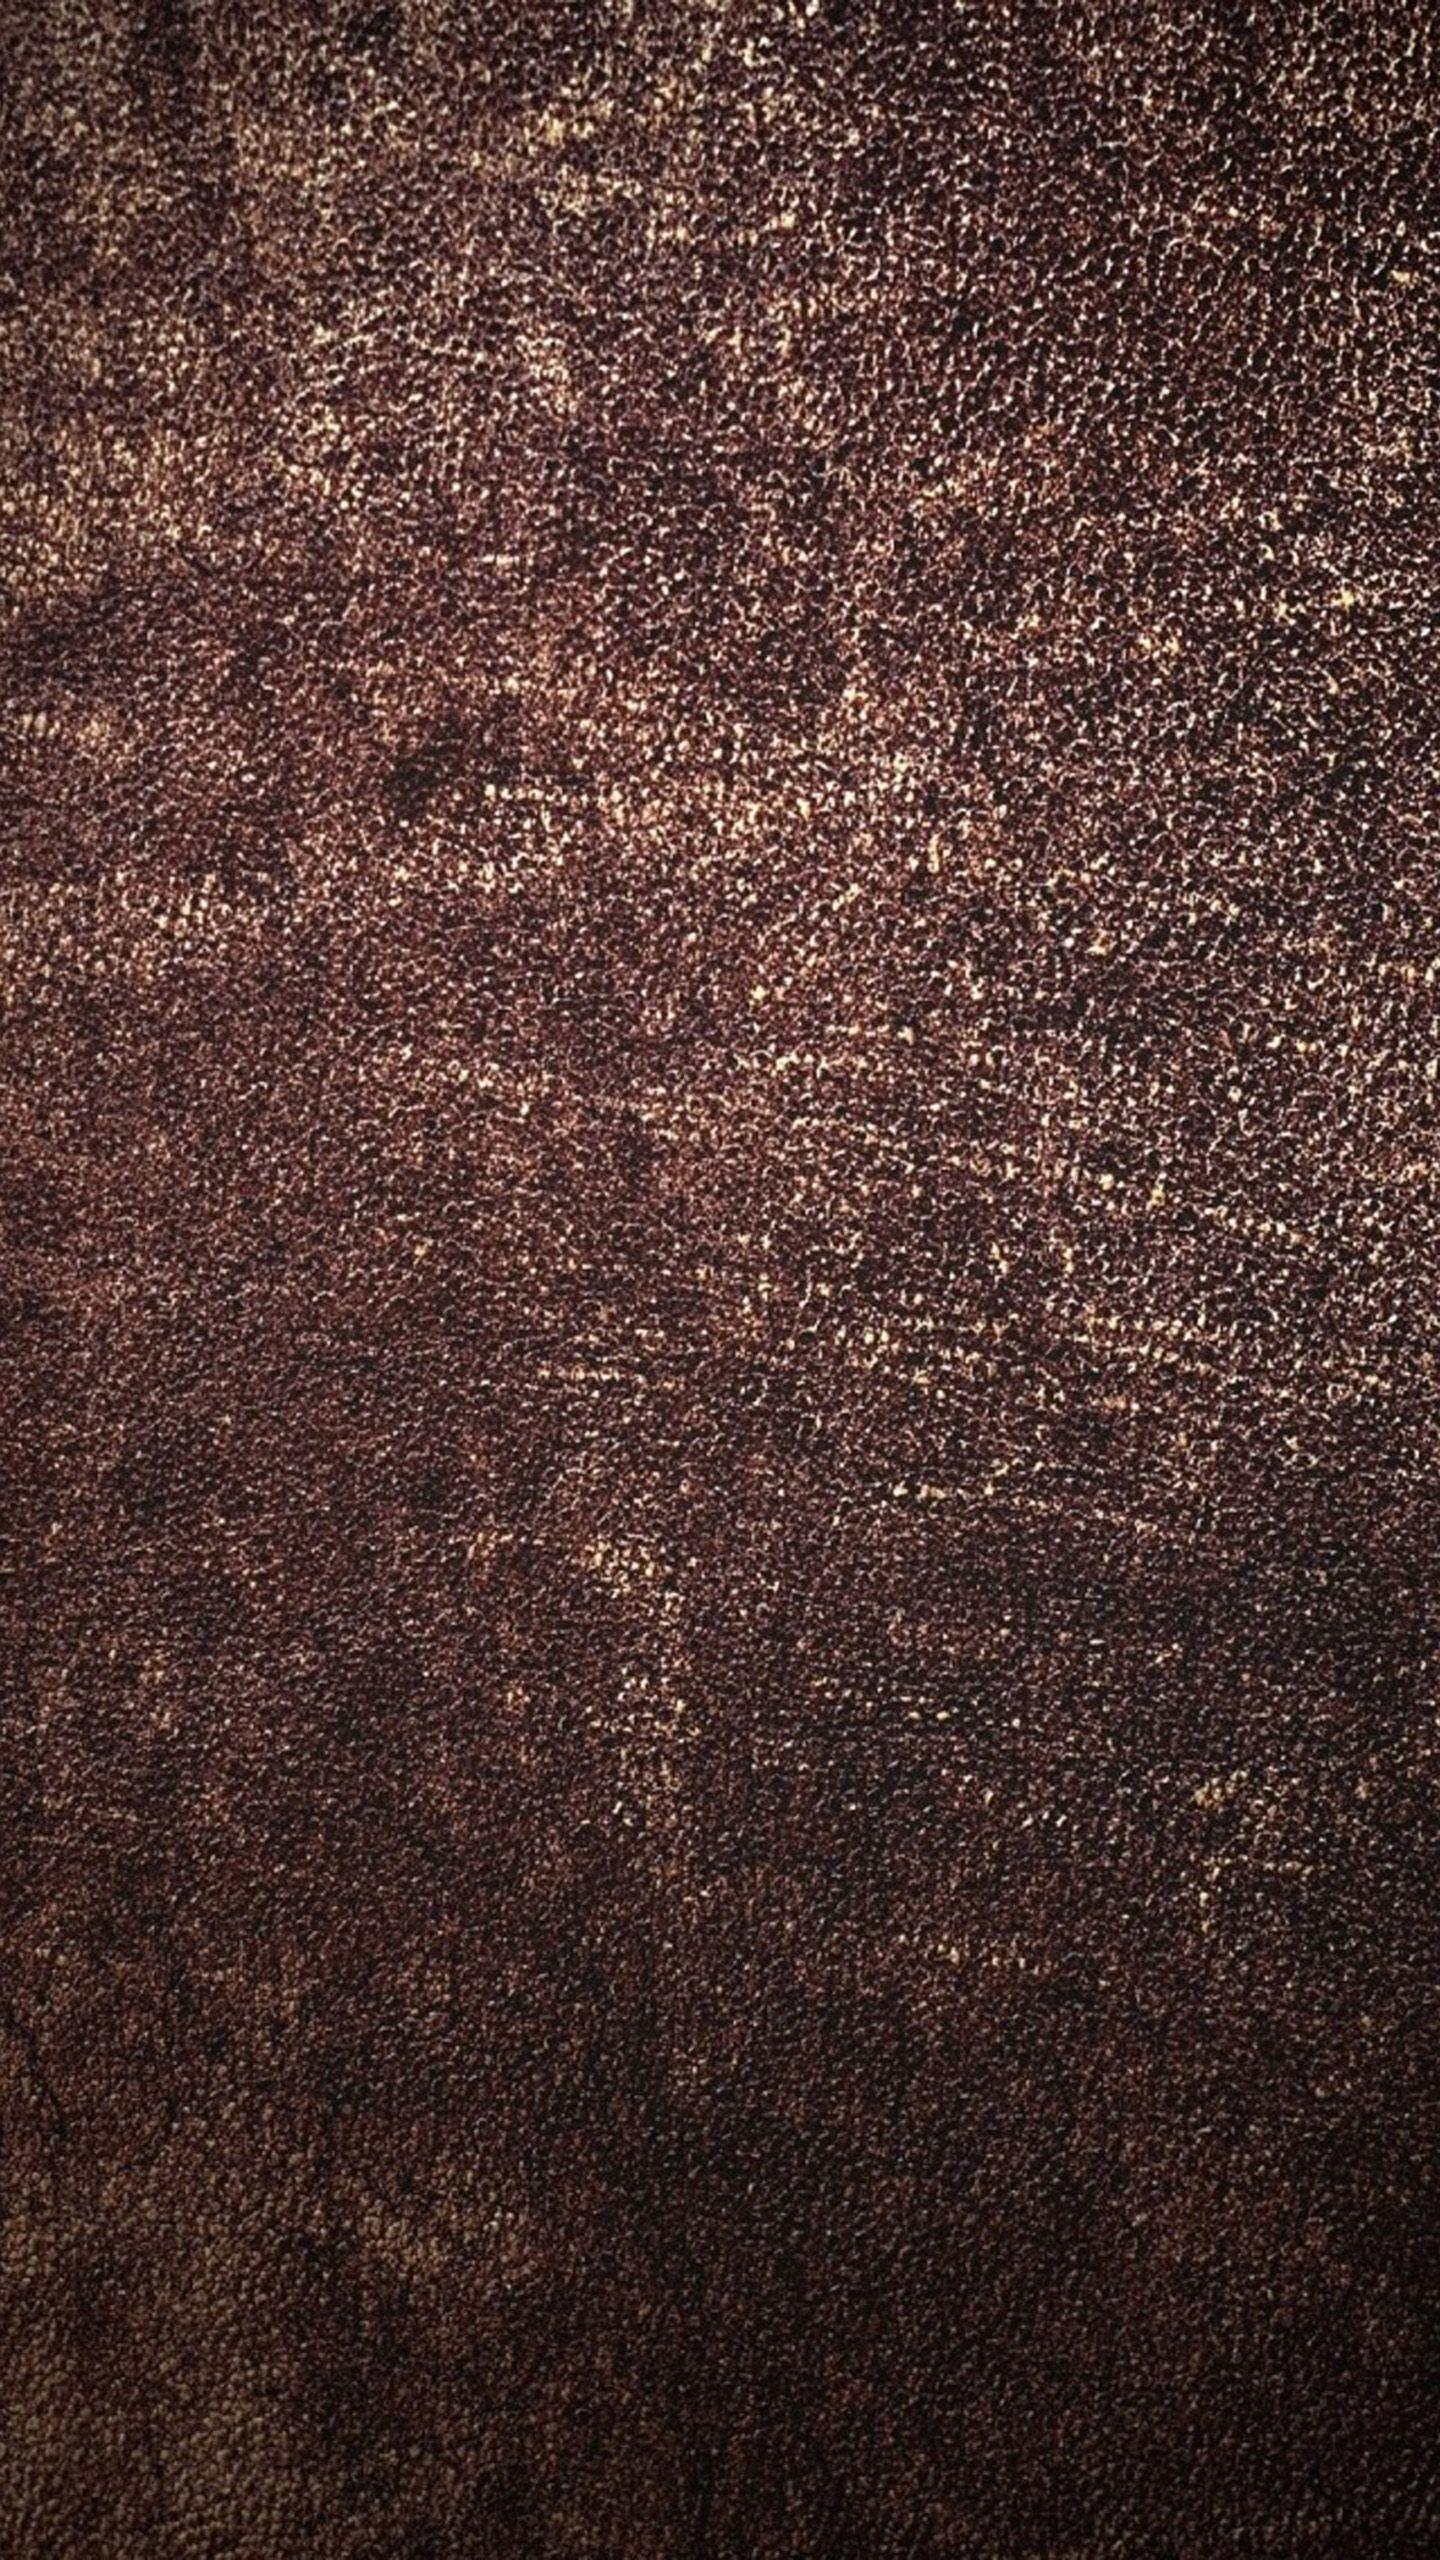 Brown Leather LG G3 Wallpaper. lg g3 wallpaper